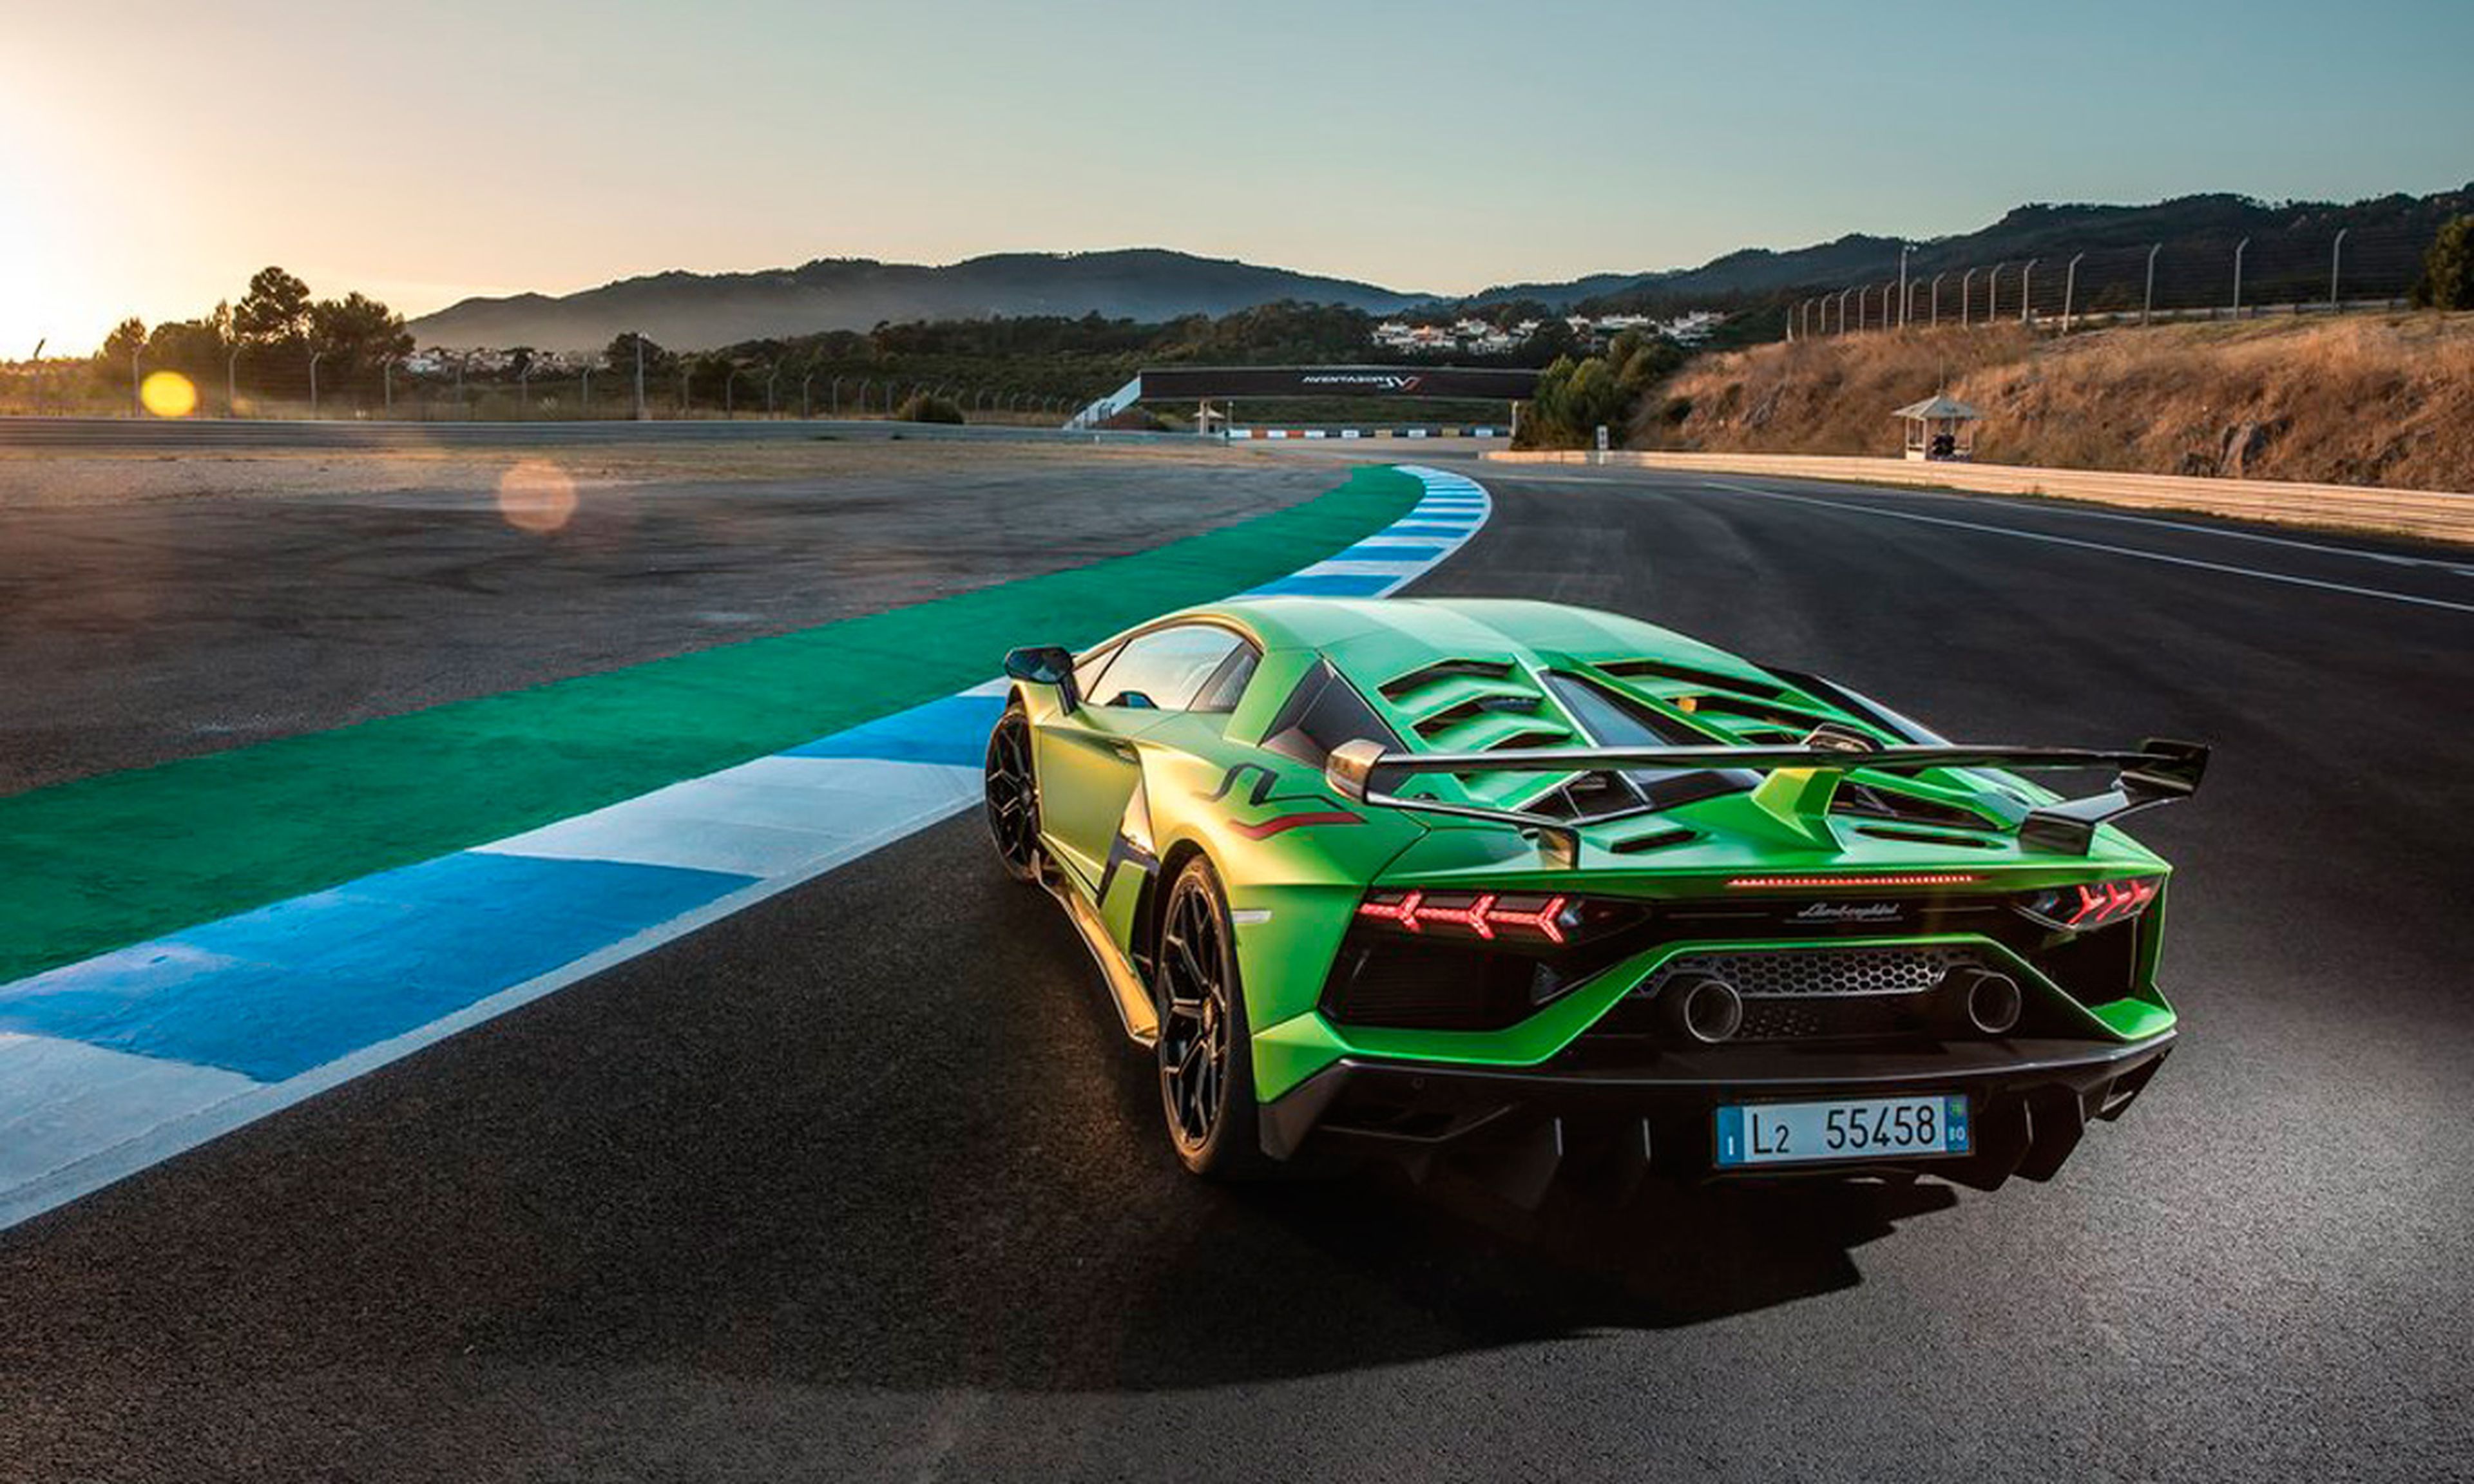 Prueba del Lamborghini Aventador SVJ en circuito